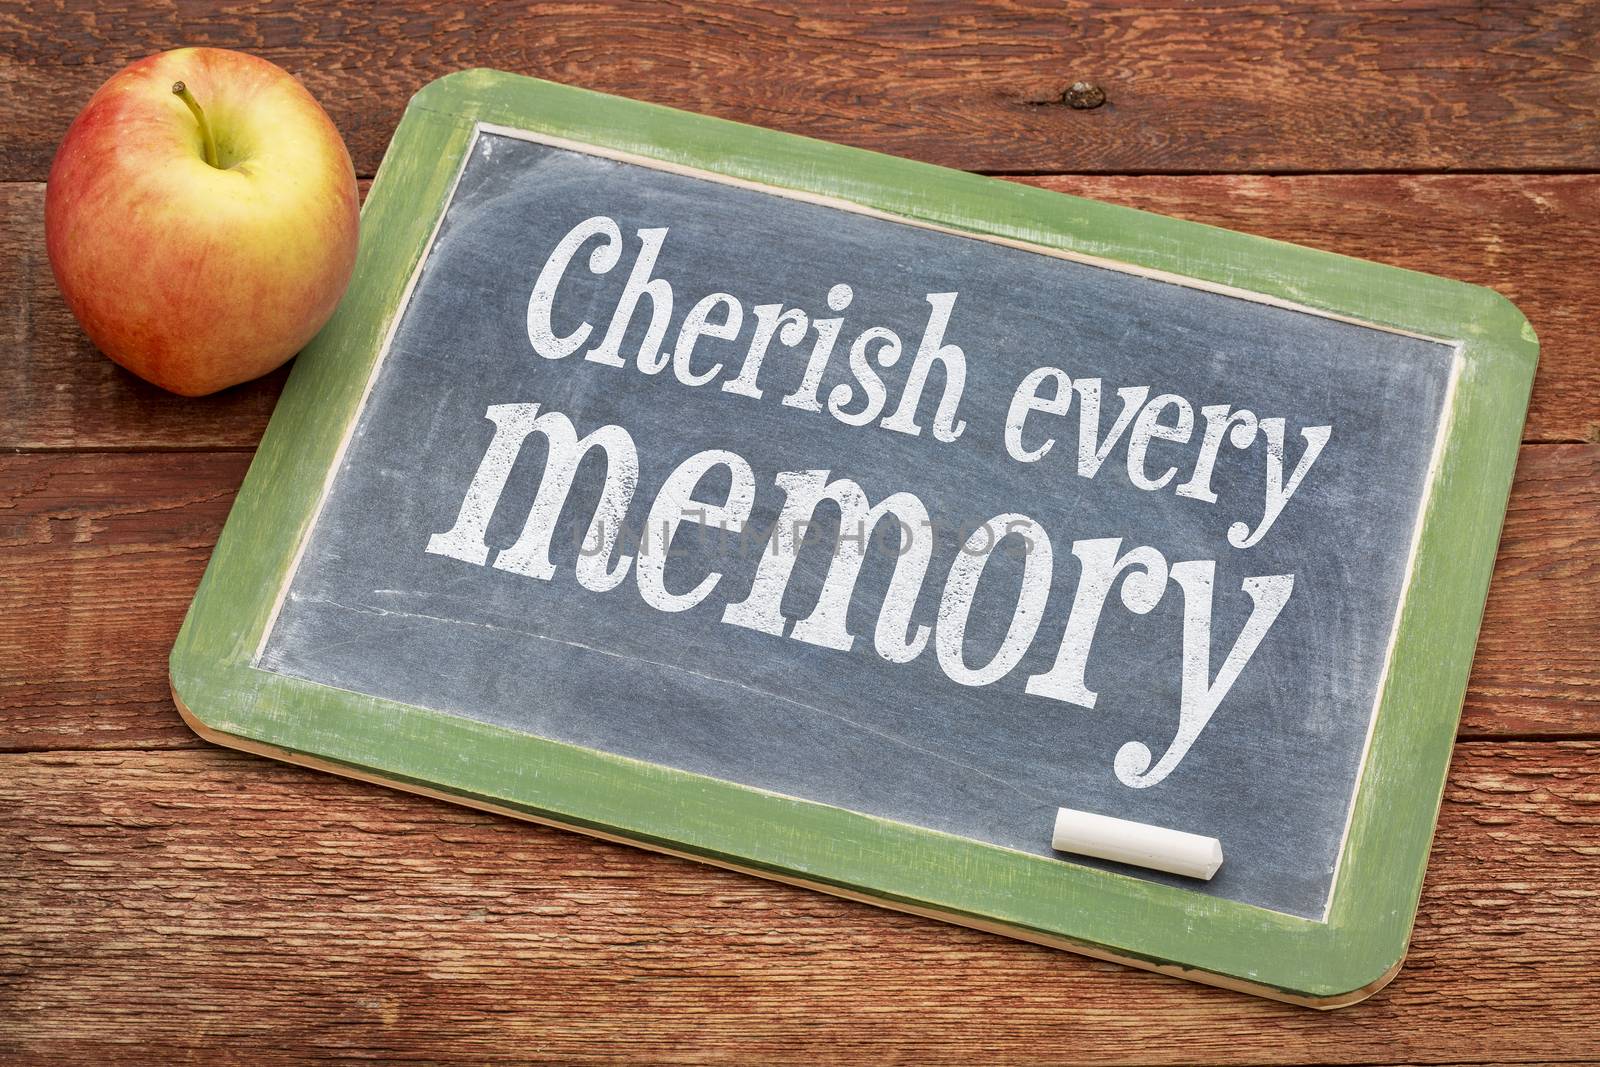 Cherish every memory  - inspirational words  on a slate blackboard against red barn wood